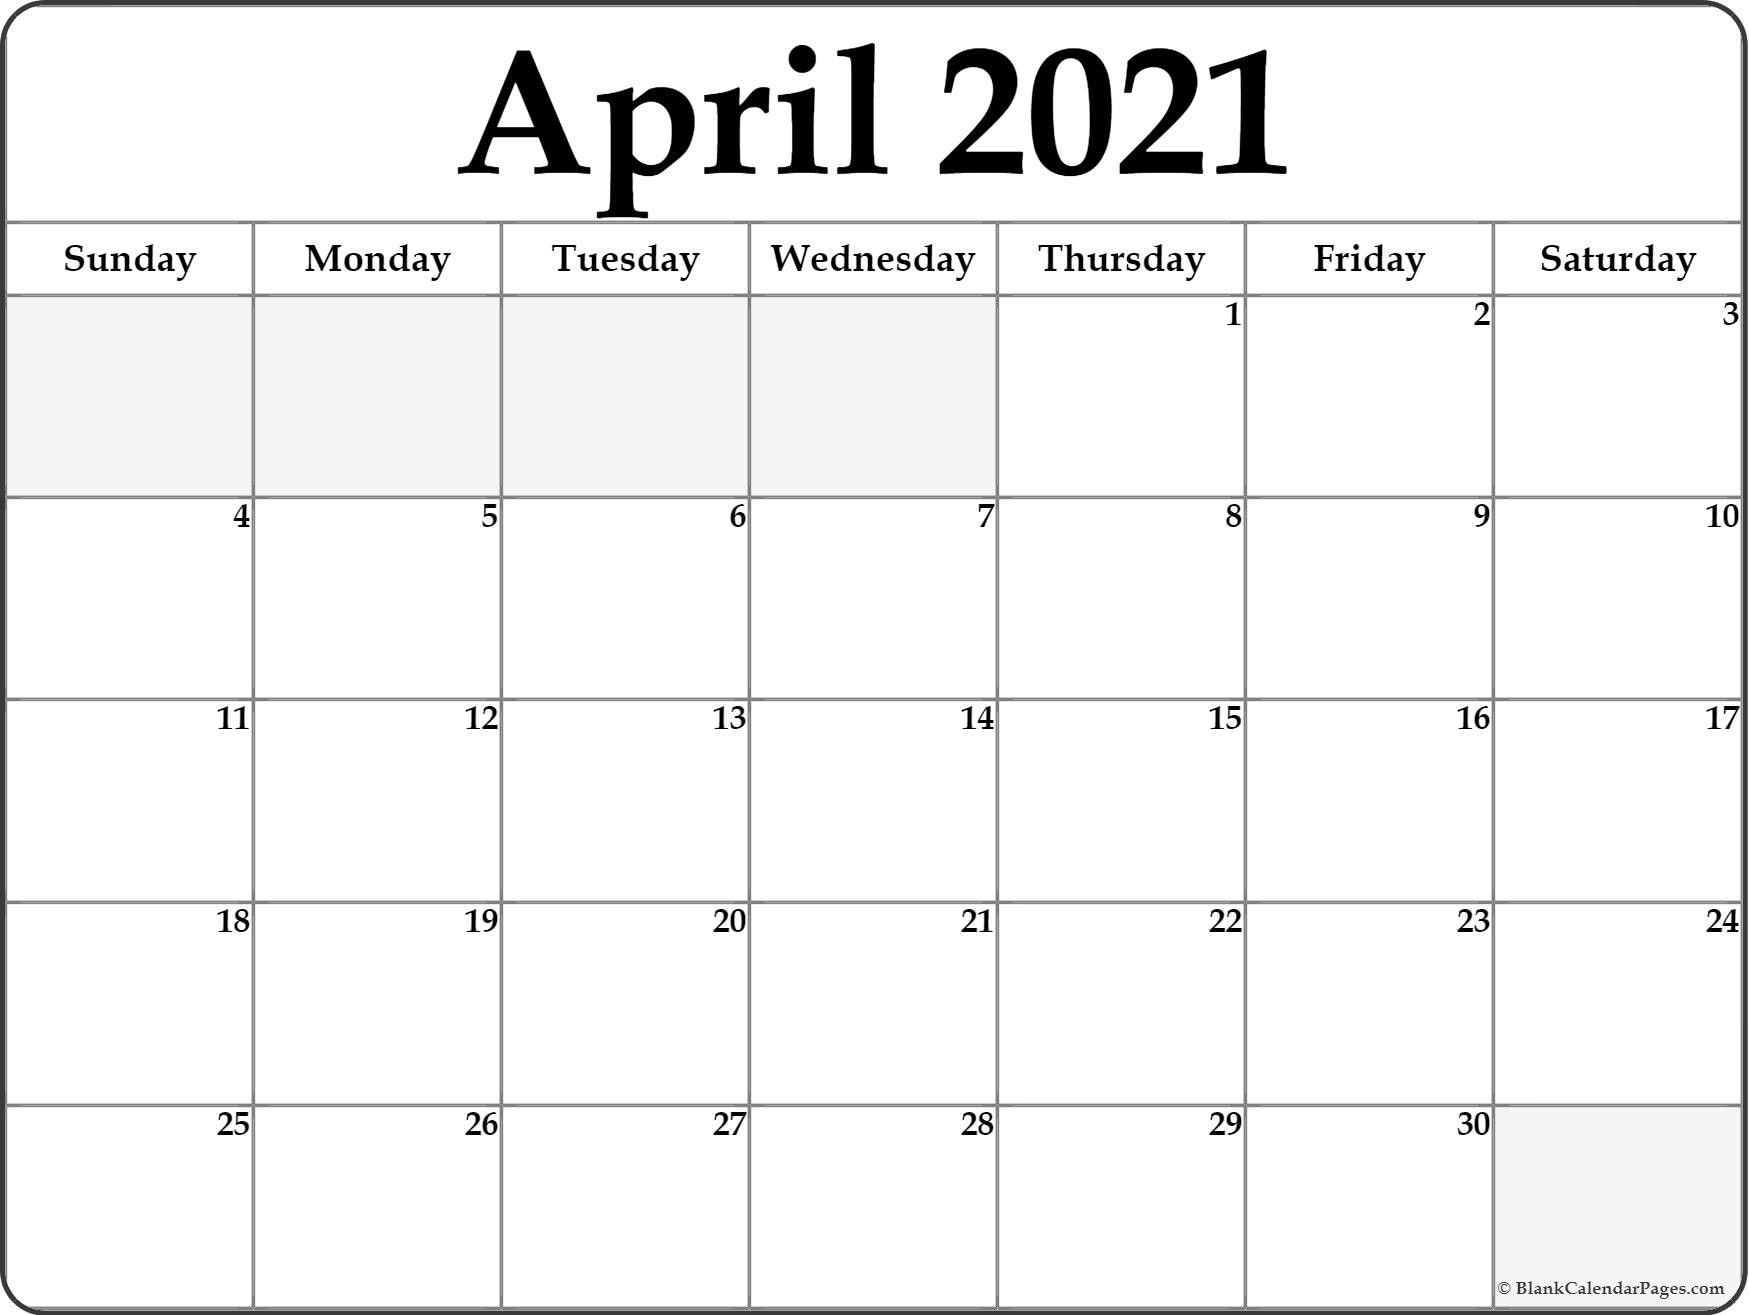 Blank April 2021 Calendar | Calendar Printables, Free-April 2021 Calendar Printable